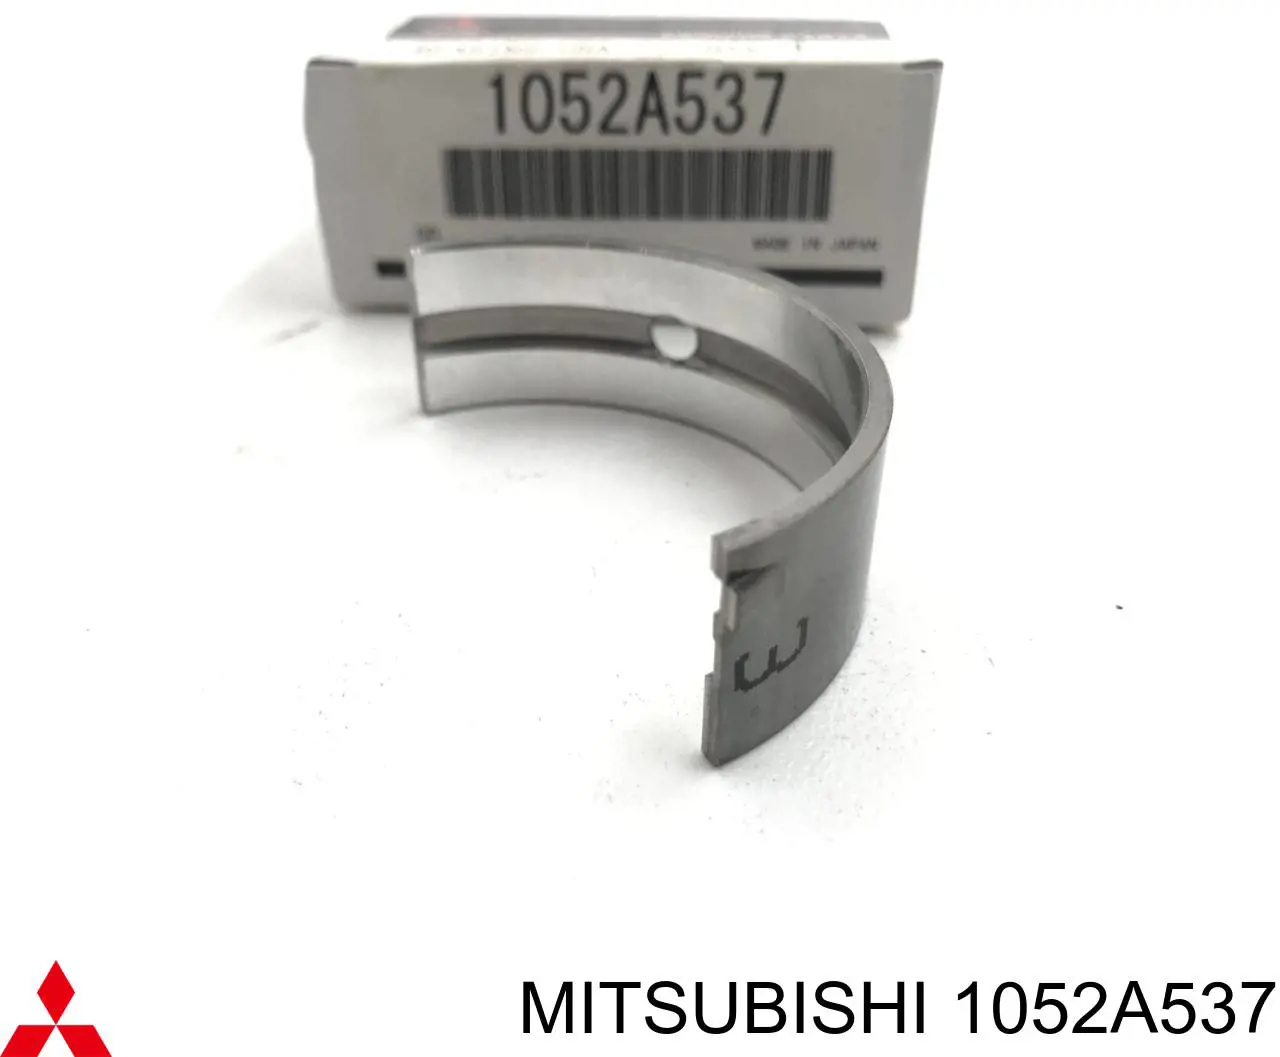 1052A537 Mitsubishi вкладыши коленвала коренные, комплект, стандарт (std)